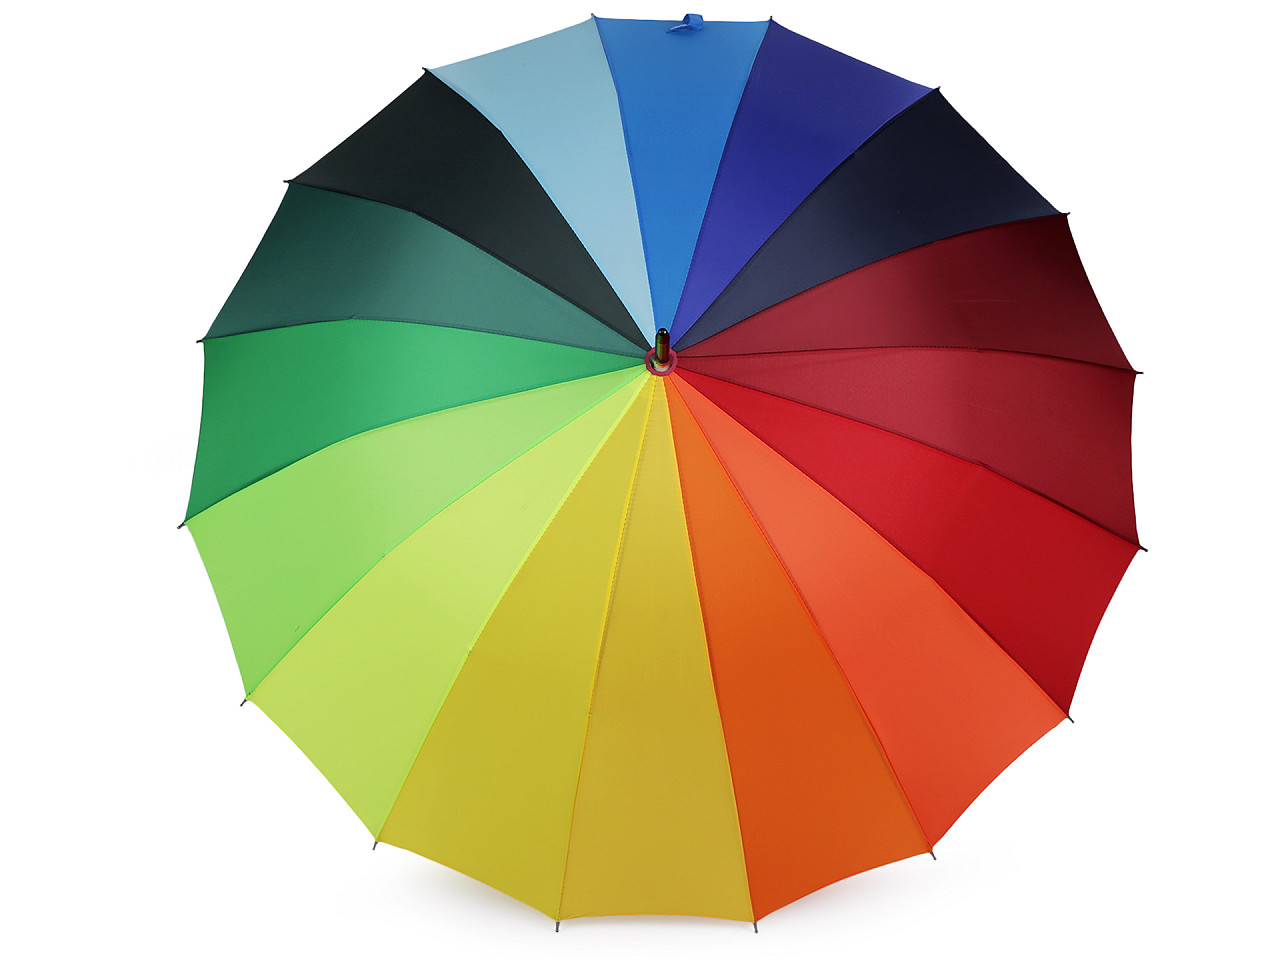 Damen-Regenschirm mit Regenbogenmuster, mehrfarbig, 1 Stück